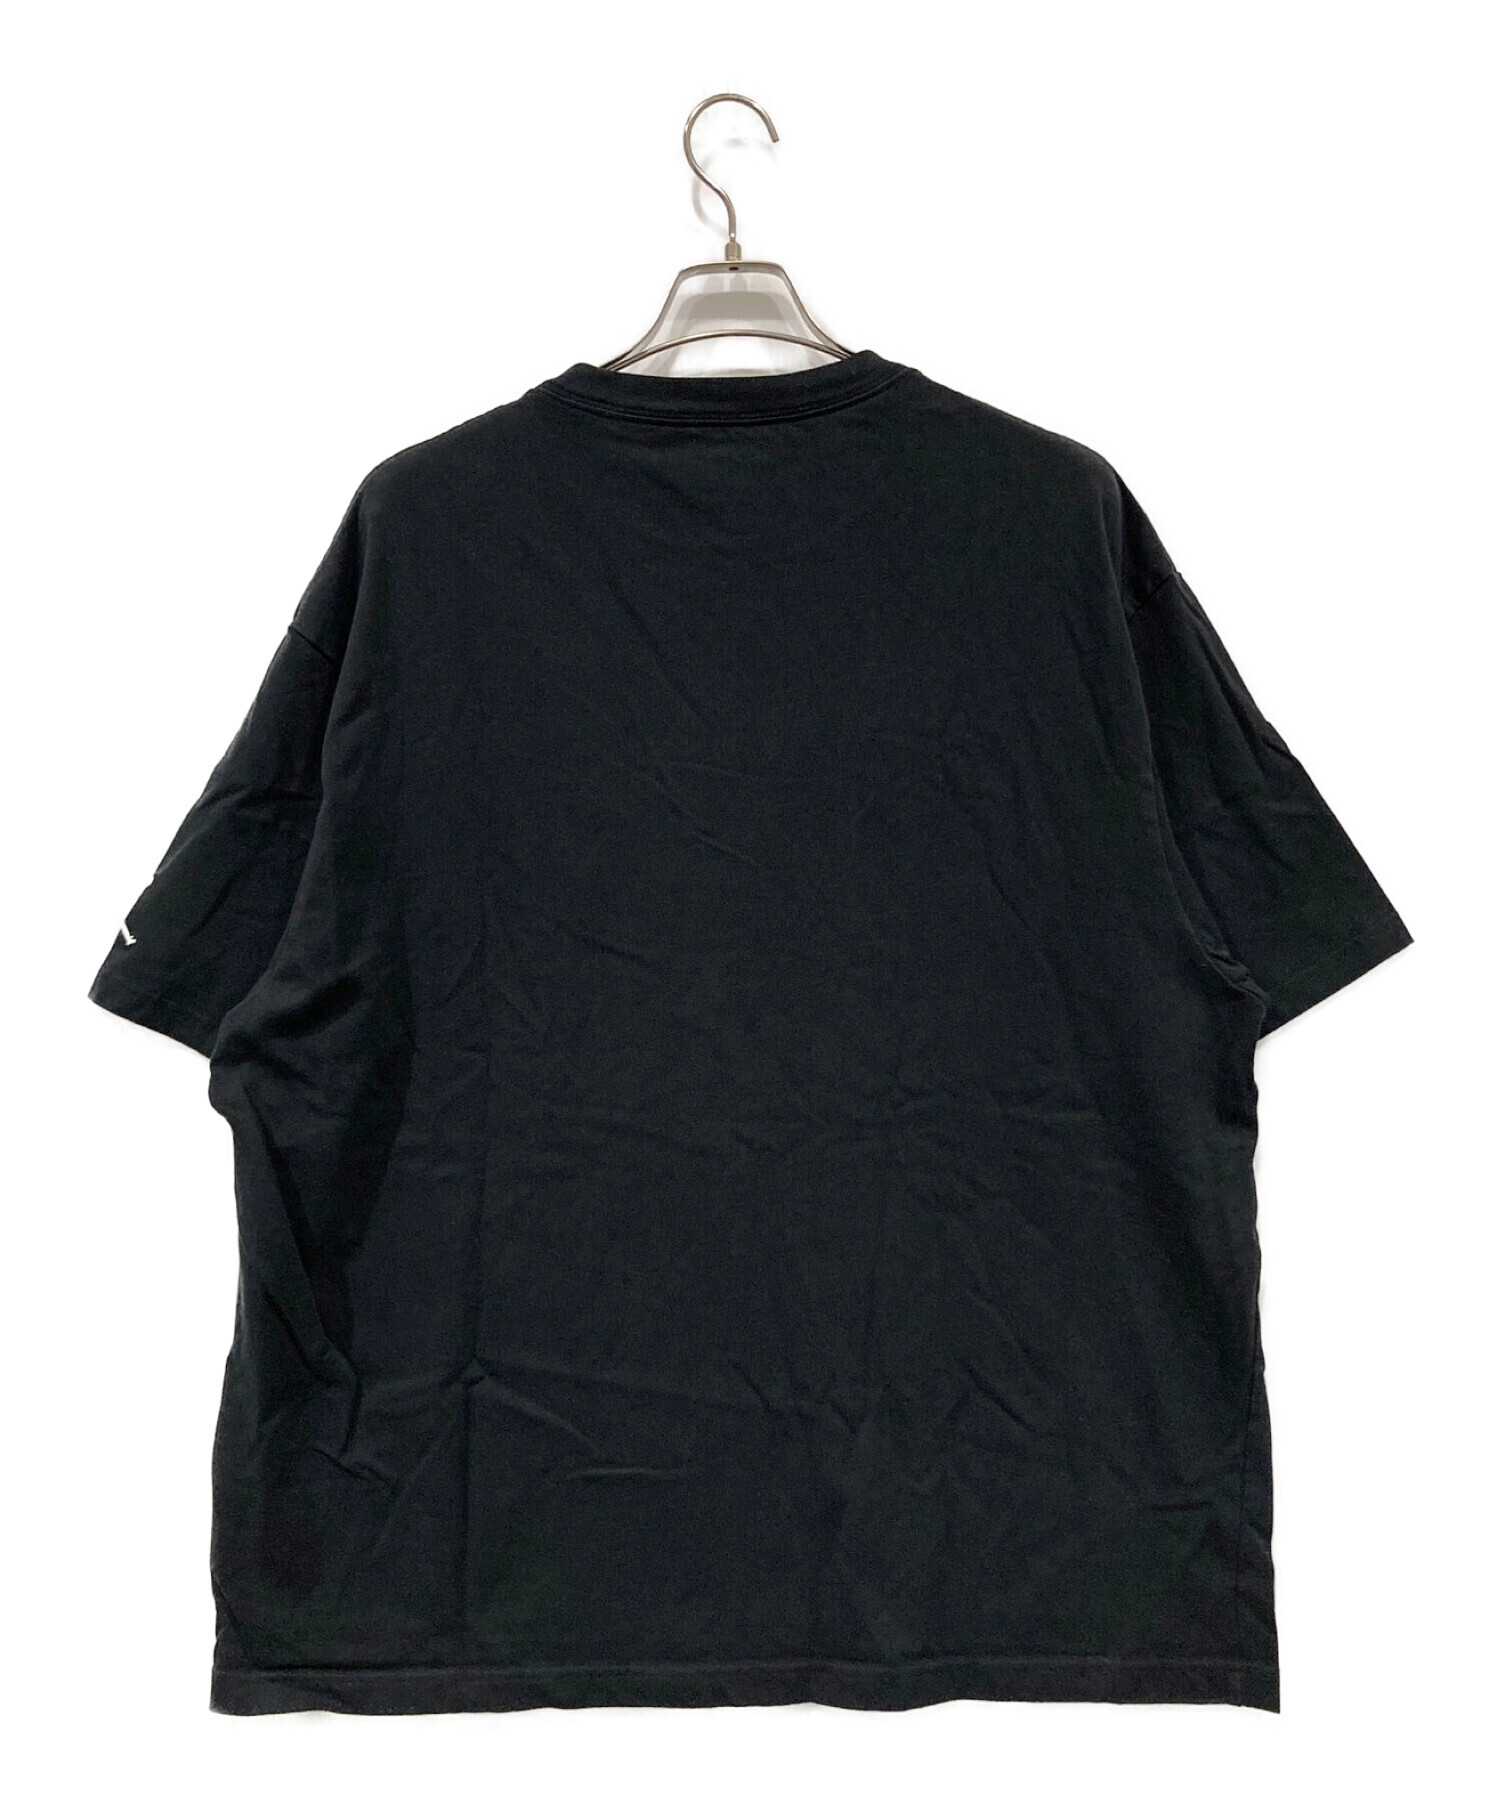 XXL NIKEジョーダン1985メンズTシャツ FD0536-010黒 AJ1